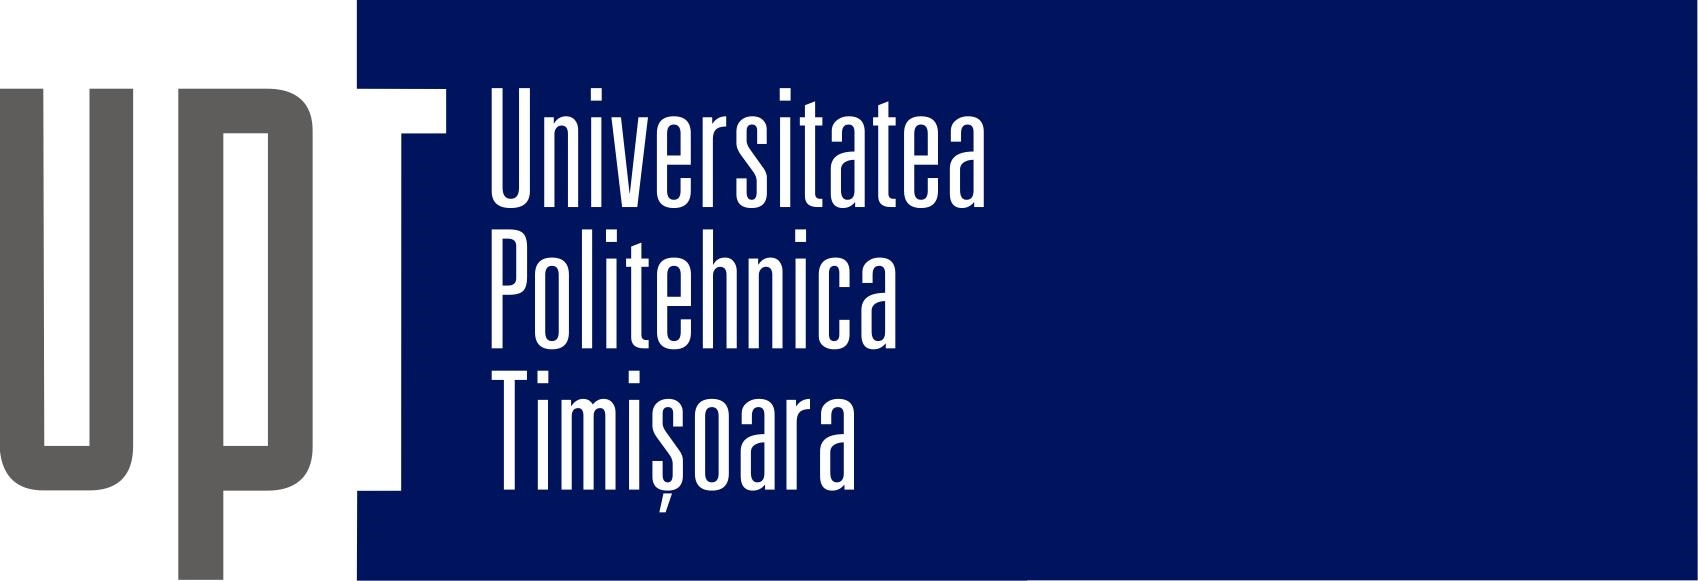 UPT logo